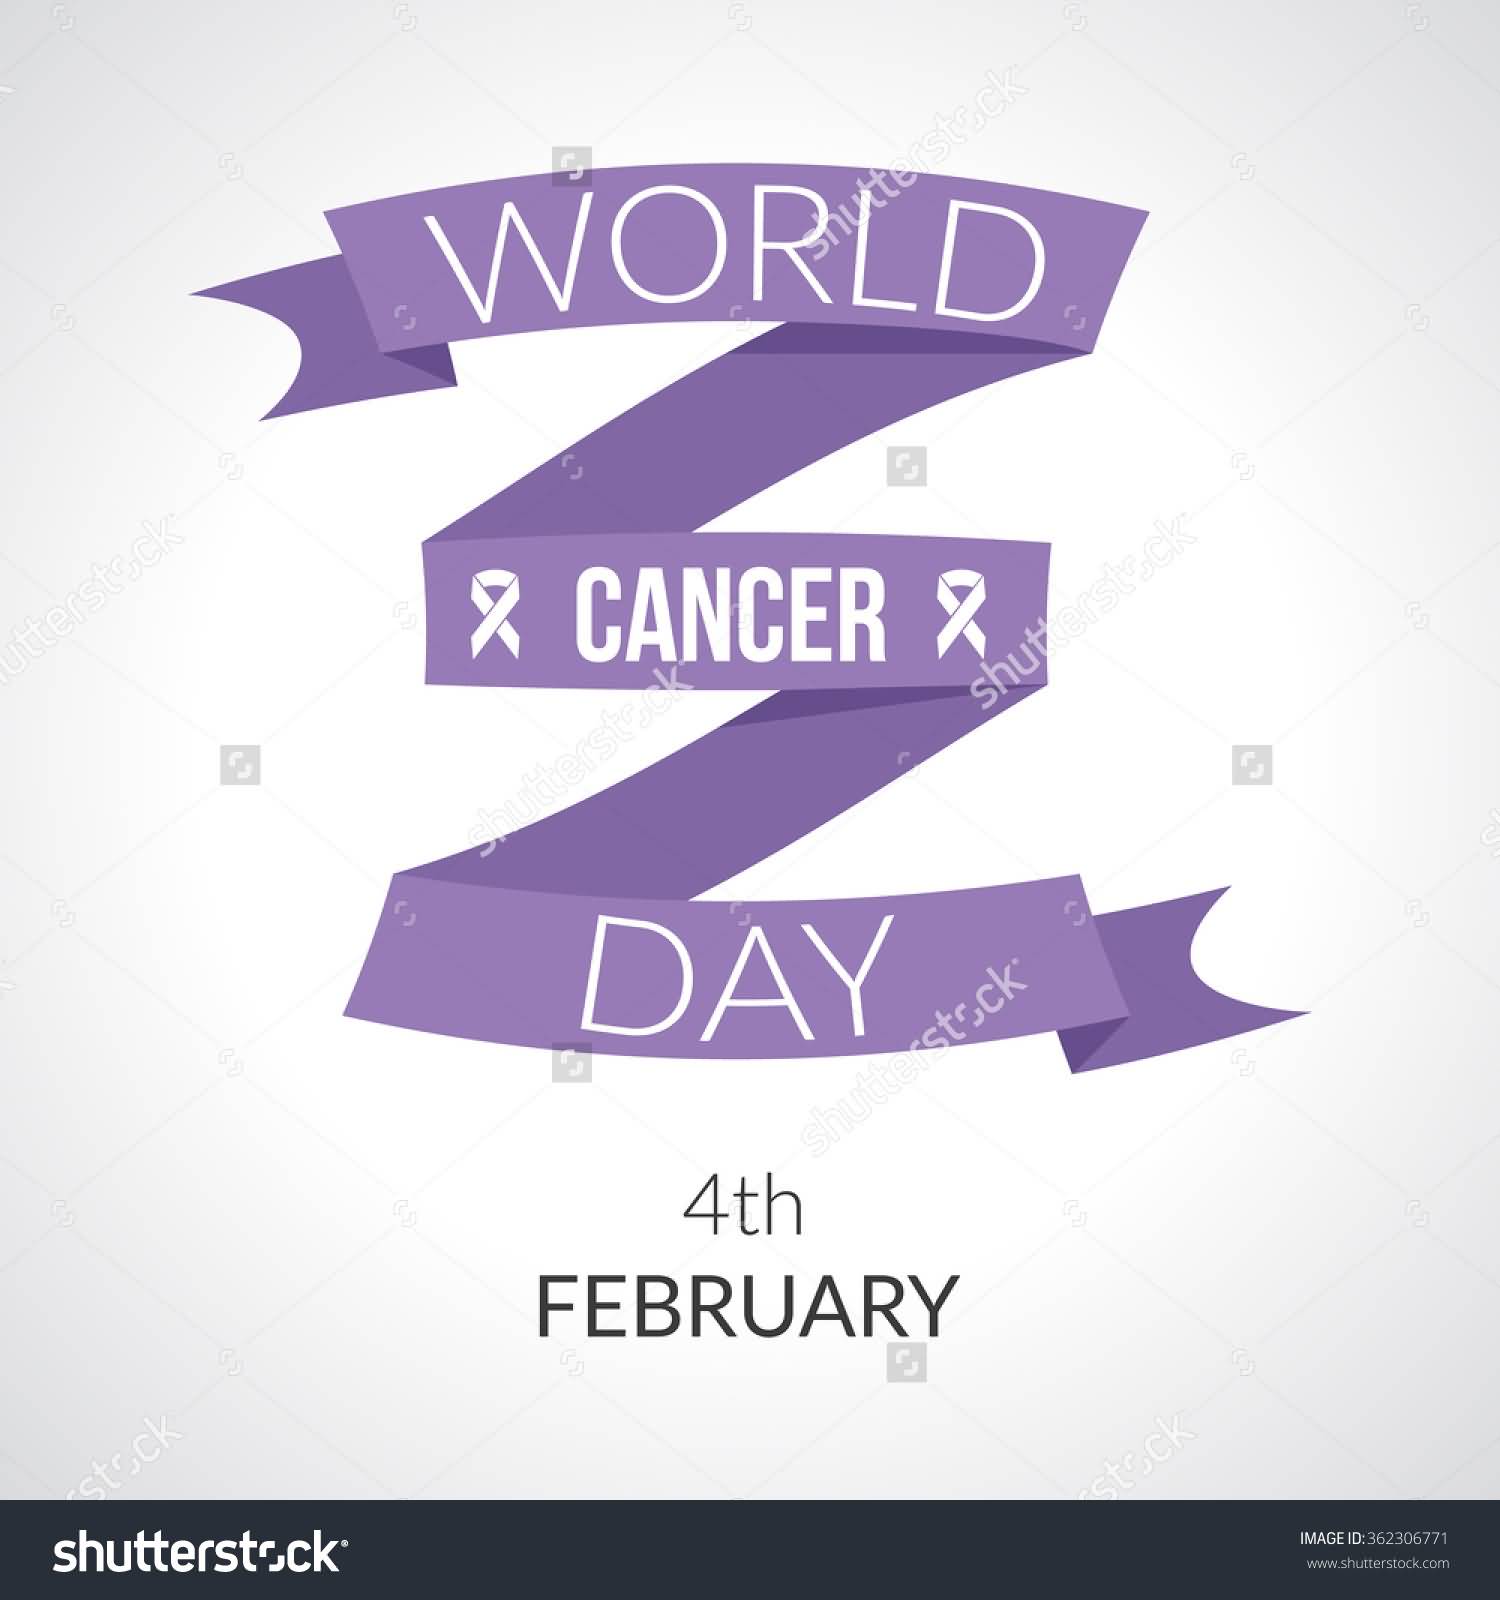 World Cancer Day 4th February Illustration